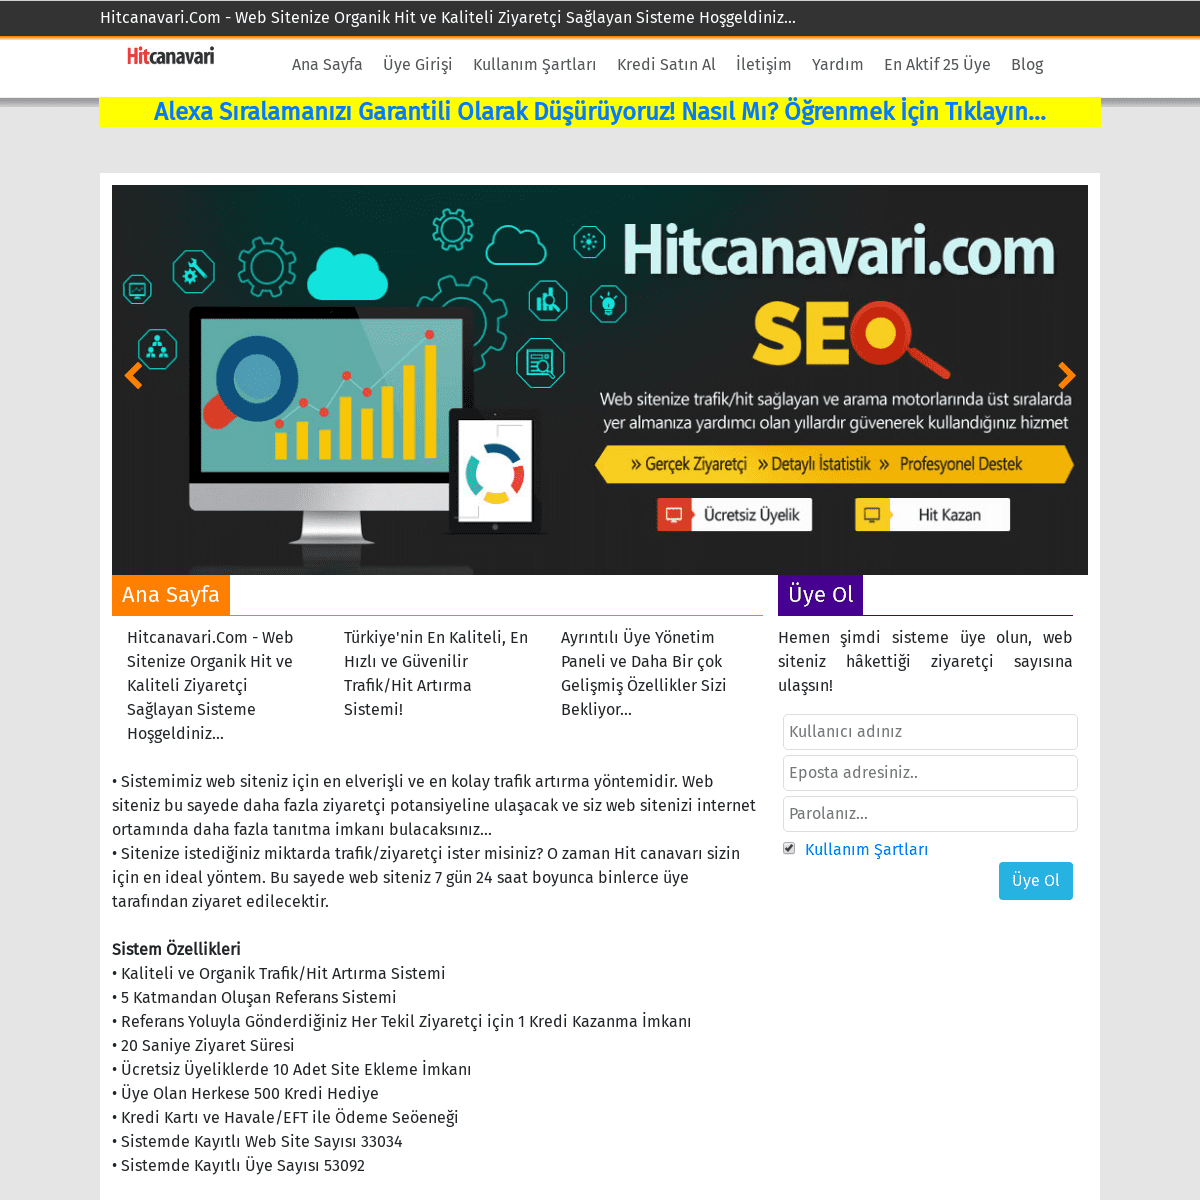 A complete backup of hitcanavari.com